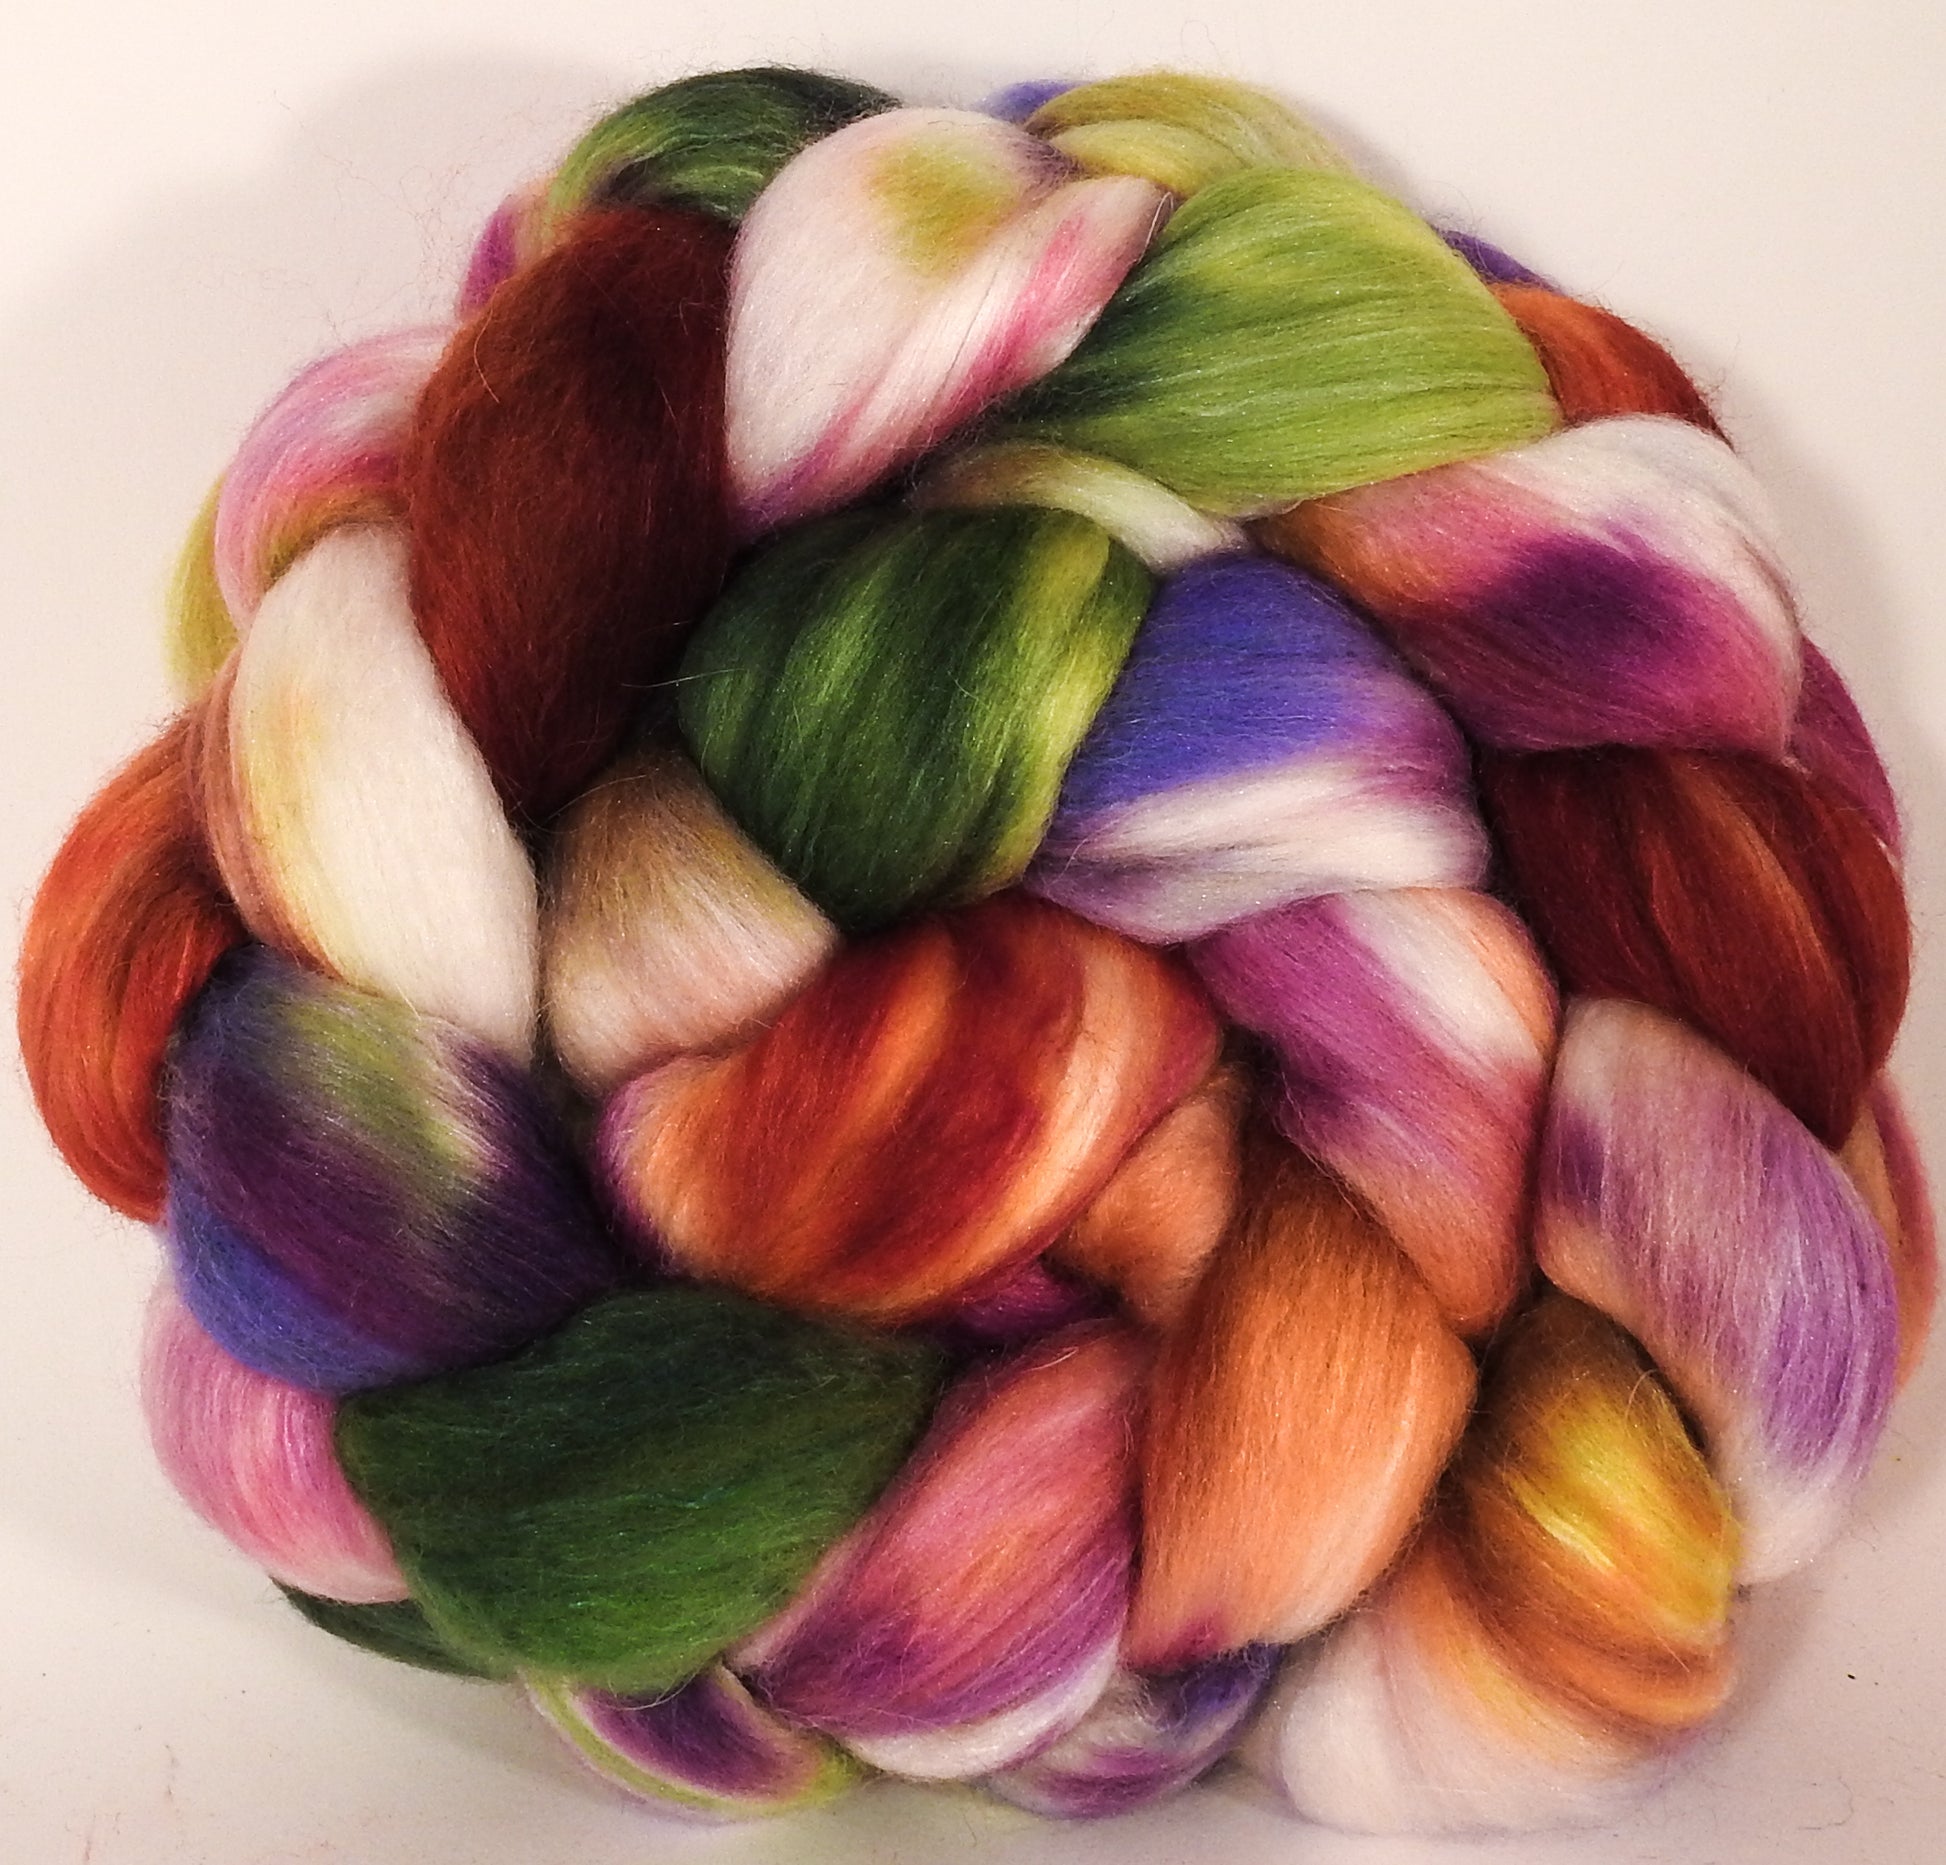 Batt in a Braid #25- Talking Flowers - 6 oz.- De-haired Llama/ Polwarth/ Mulberry Silk (33/33/33 ) - Inglenook Fibers